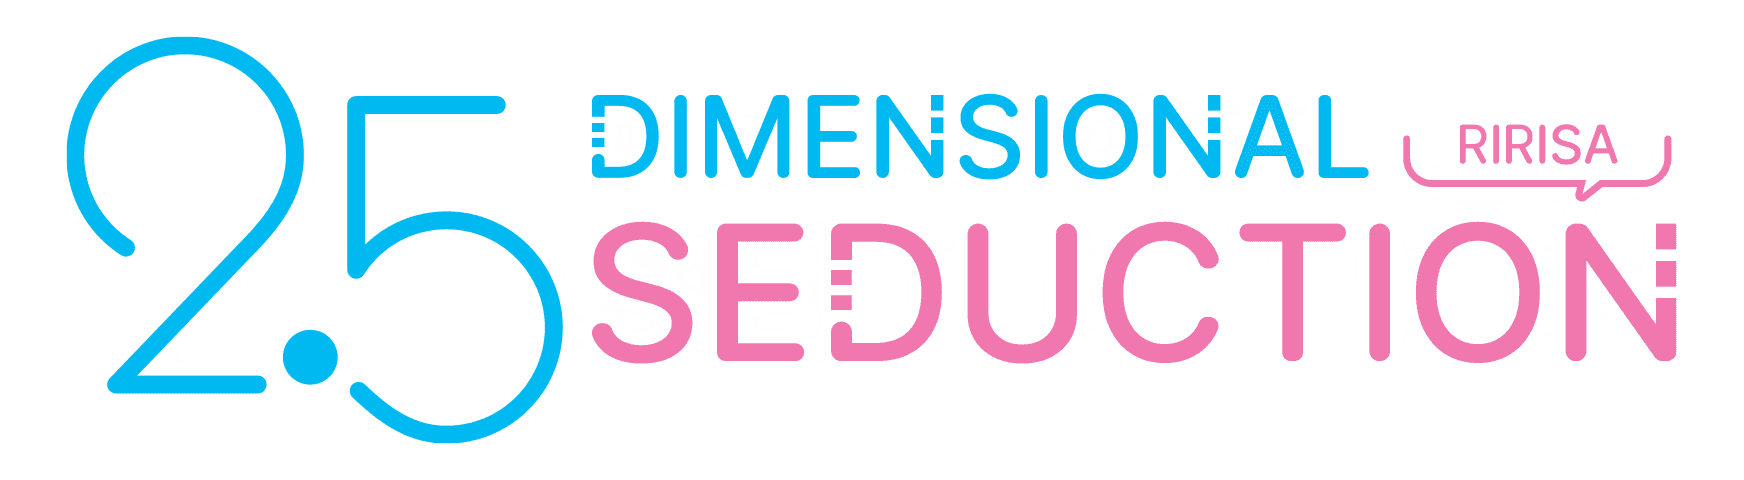 2.5 Dimensional Seduction logo